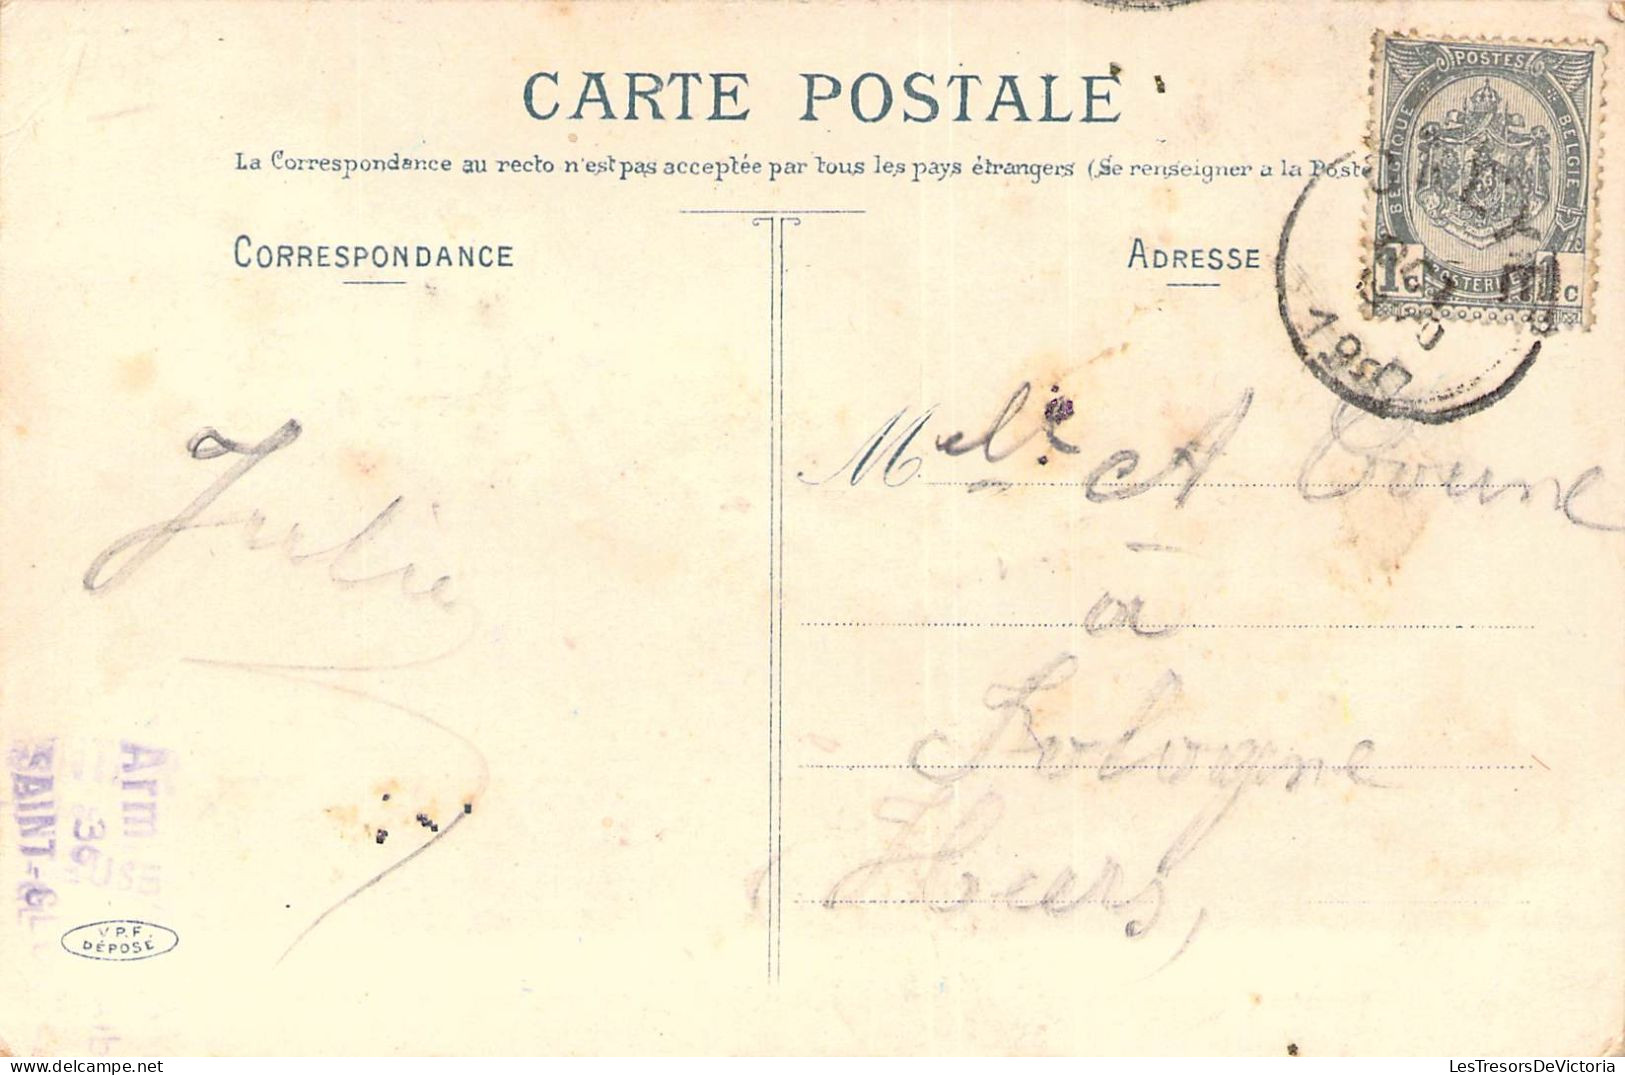 BELGIQUE - Souvenir D'OREYE - Carte Postale Ancienne - Oreye